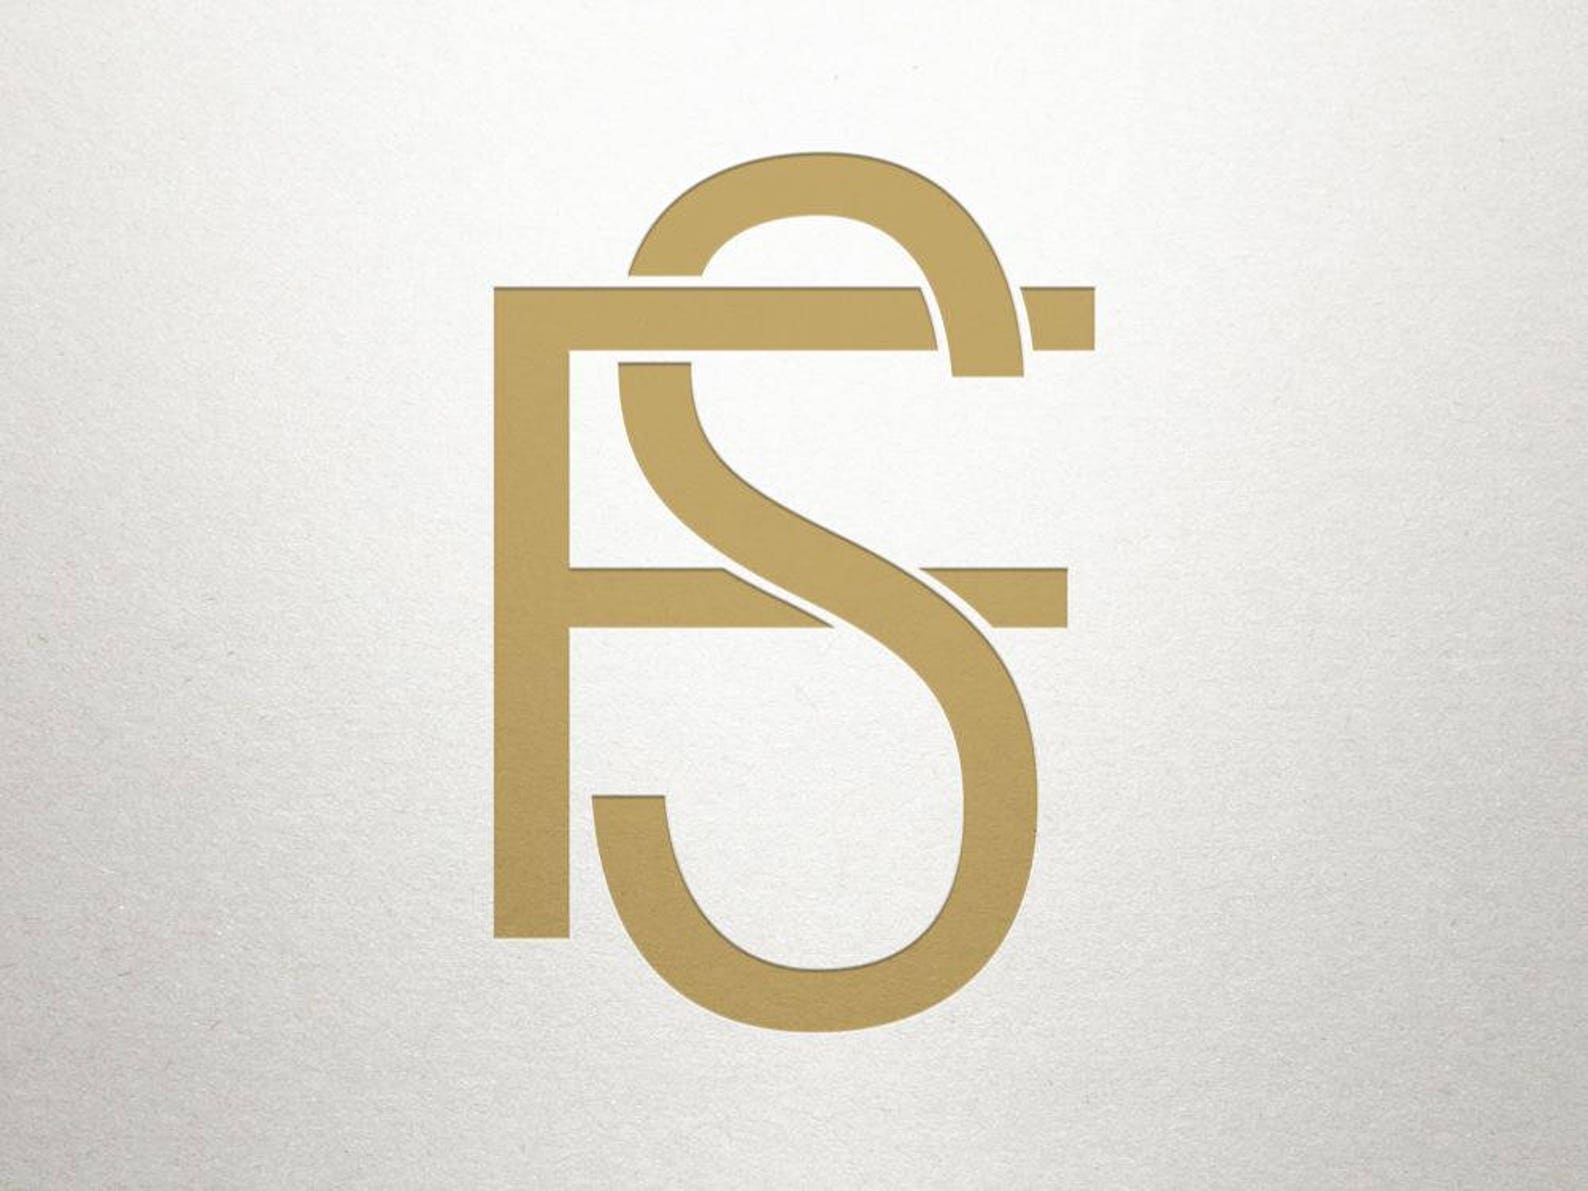 Letter logos. Буквы es. Лого буква es. Буква s + f. Se логотип.